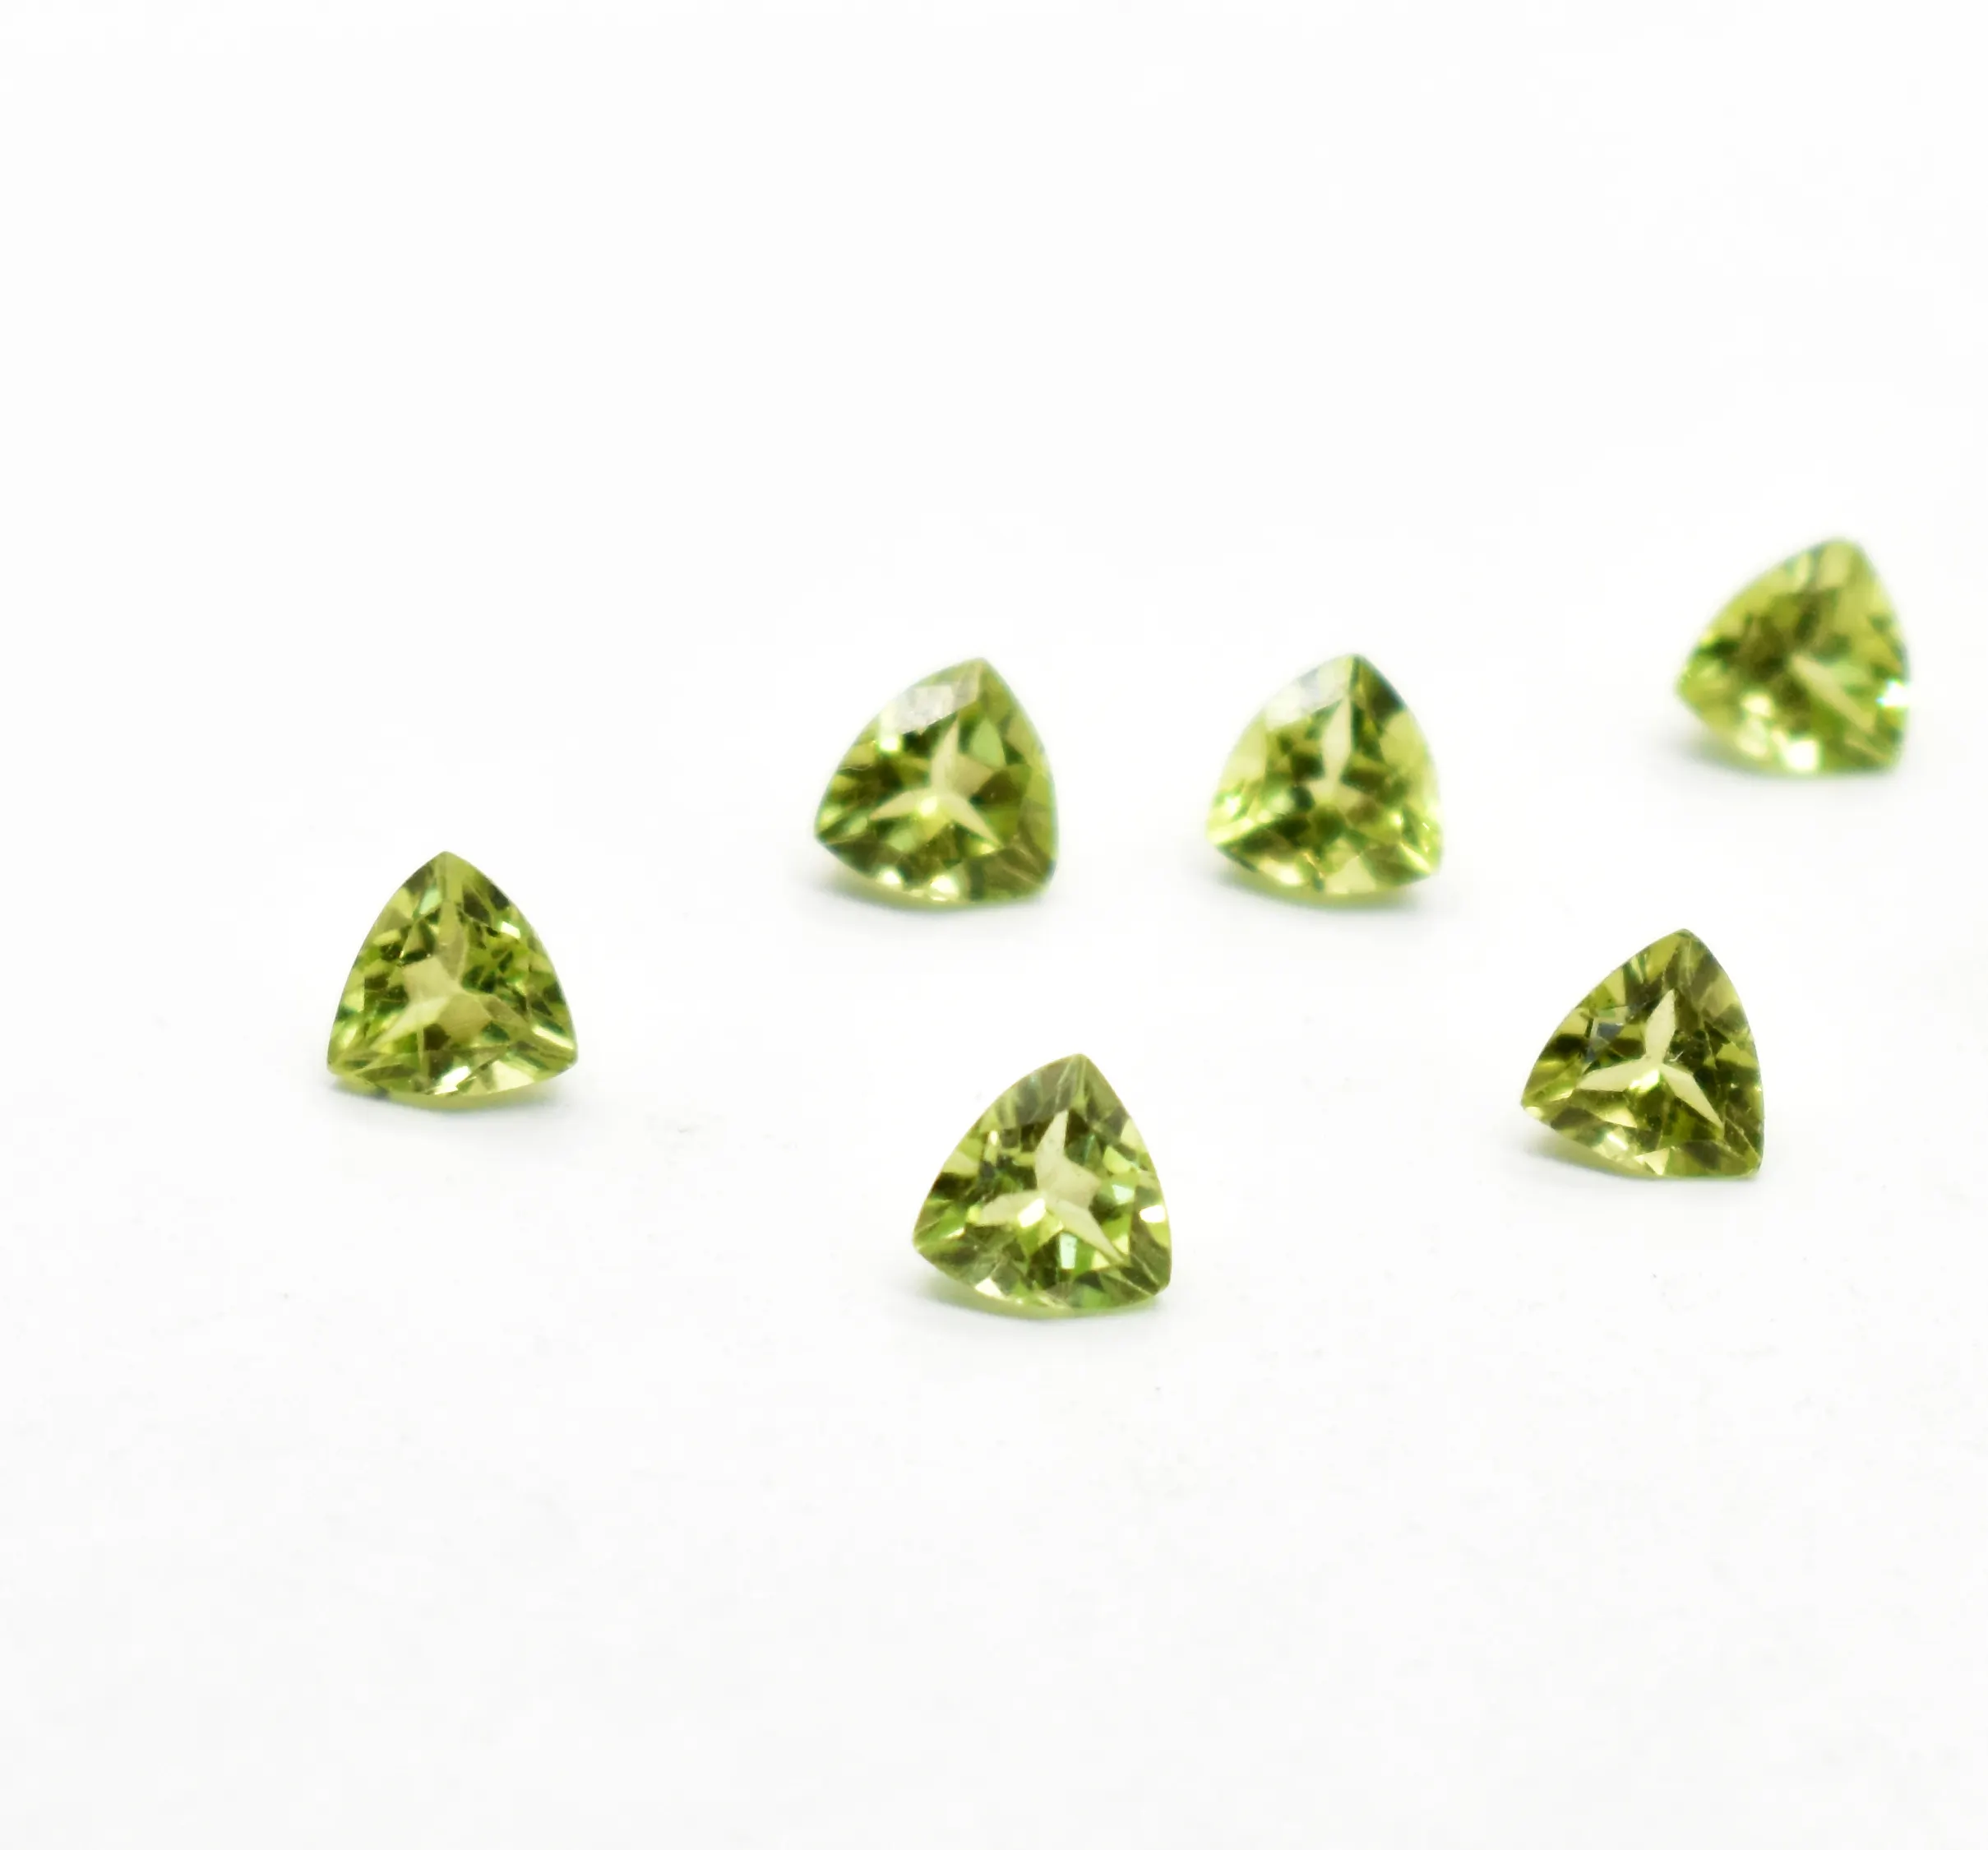 Doğal yeşil peridot trilyon faceted taş gevşek taş en kaliteli yeşil peridot trilyon faceted